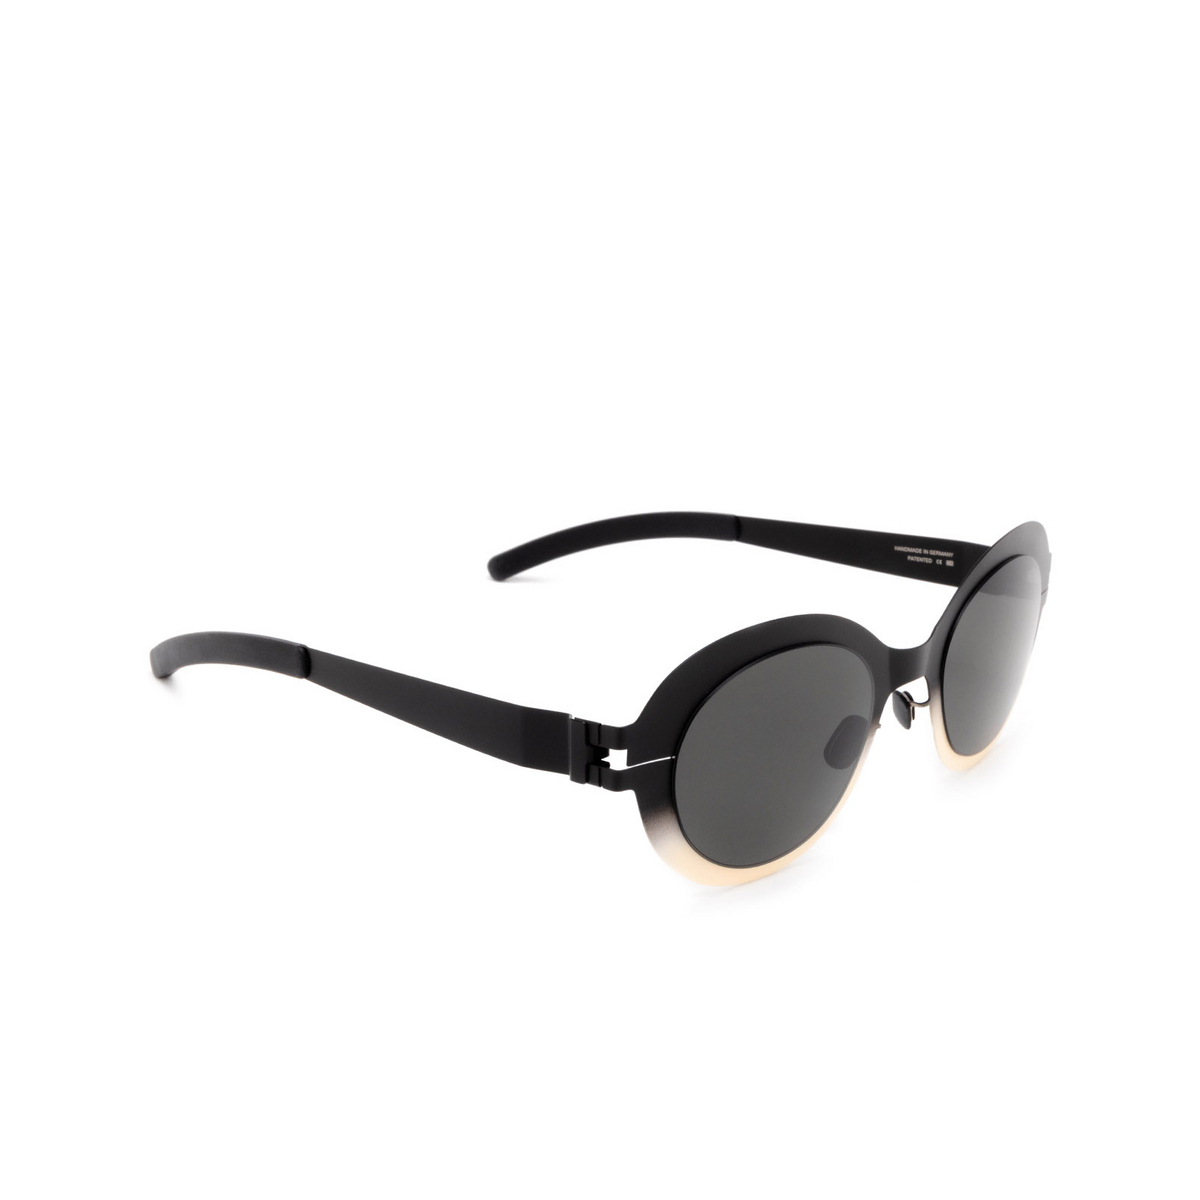 Mykita® Oval Sunglasses: Focus color 476 Black/chantilly White - three-quarters view